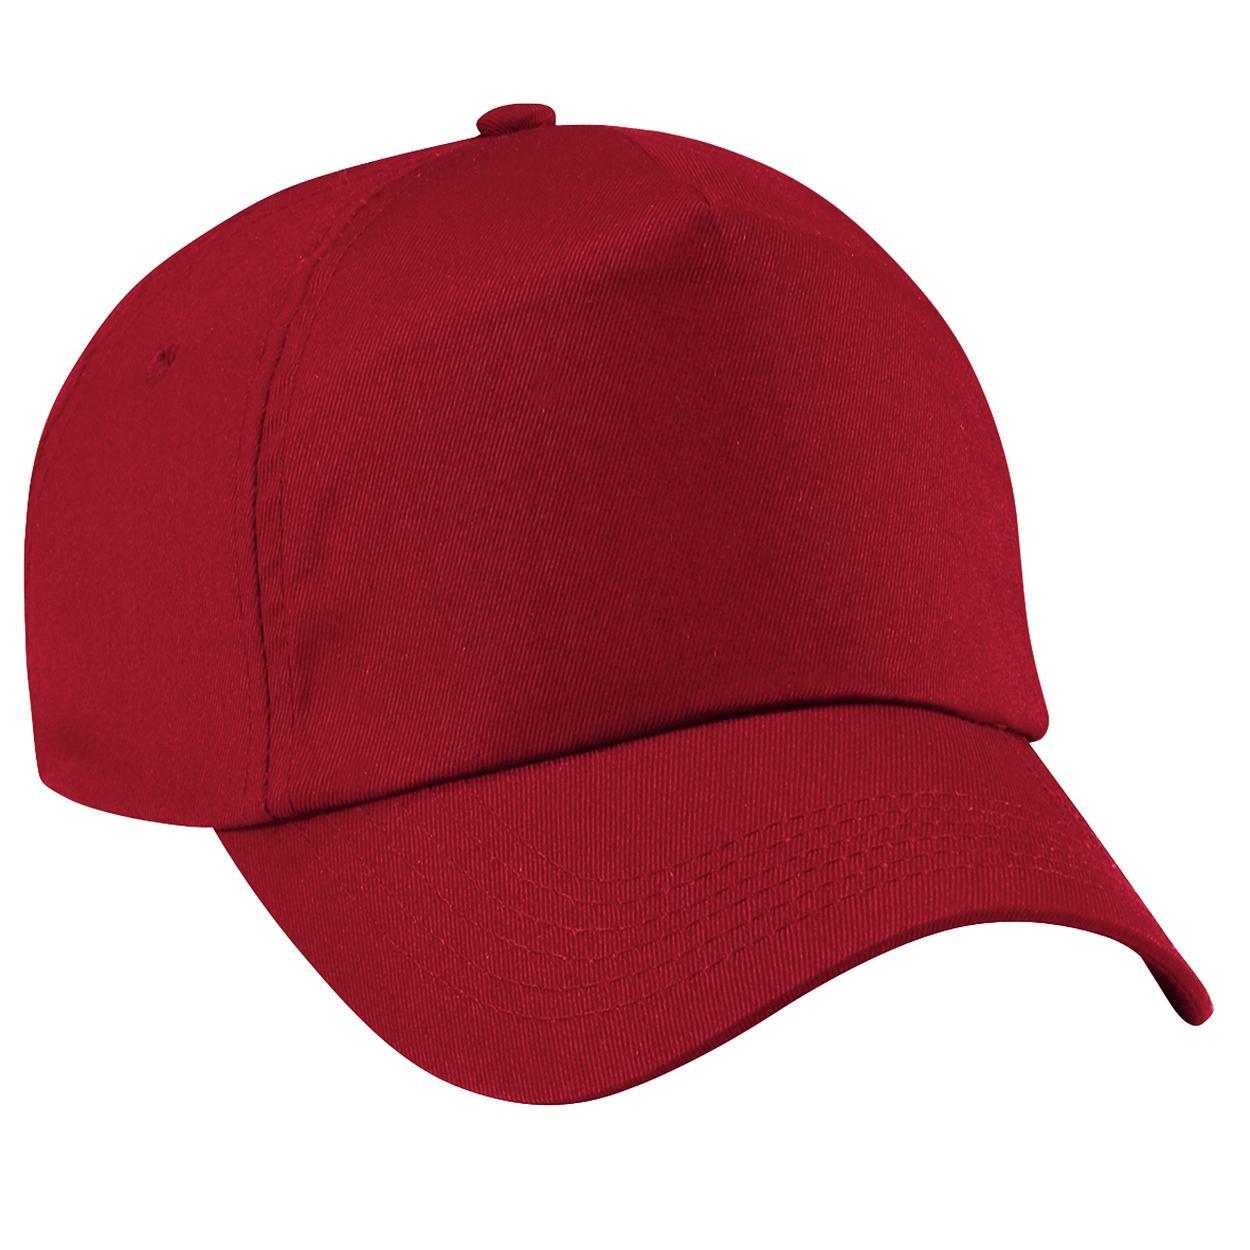 Beechfield Unisex Plain Original 5 Panel Baseball Cap (Classic Red) (One Size)